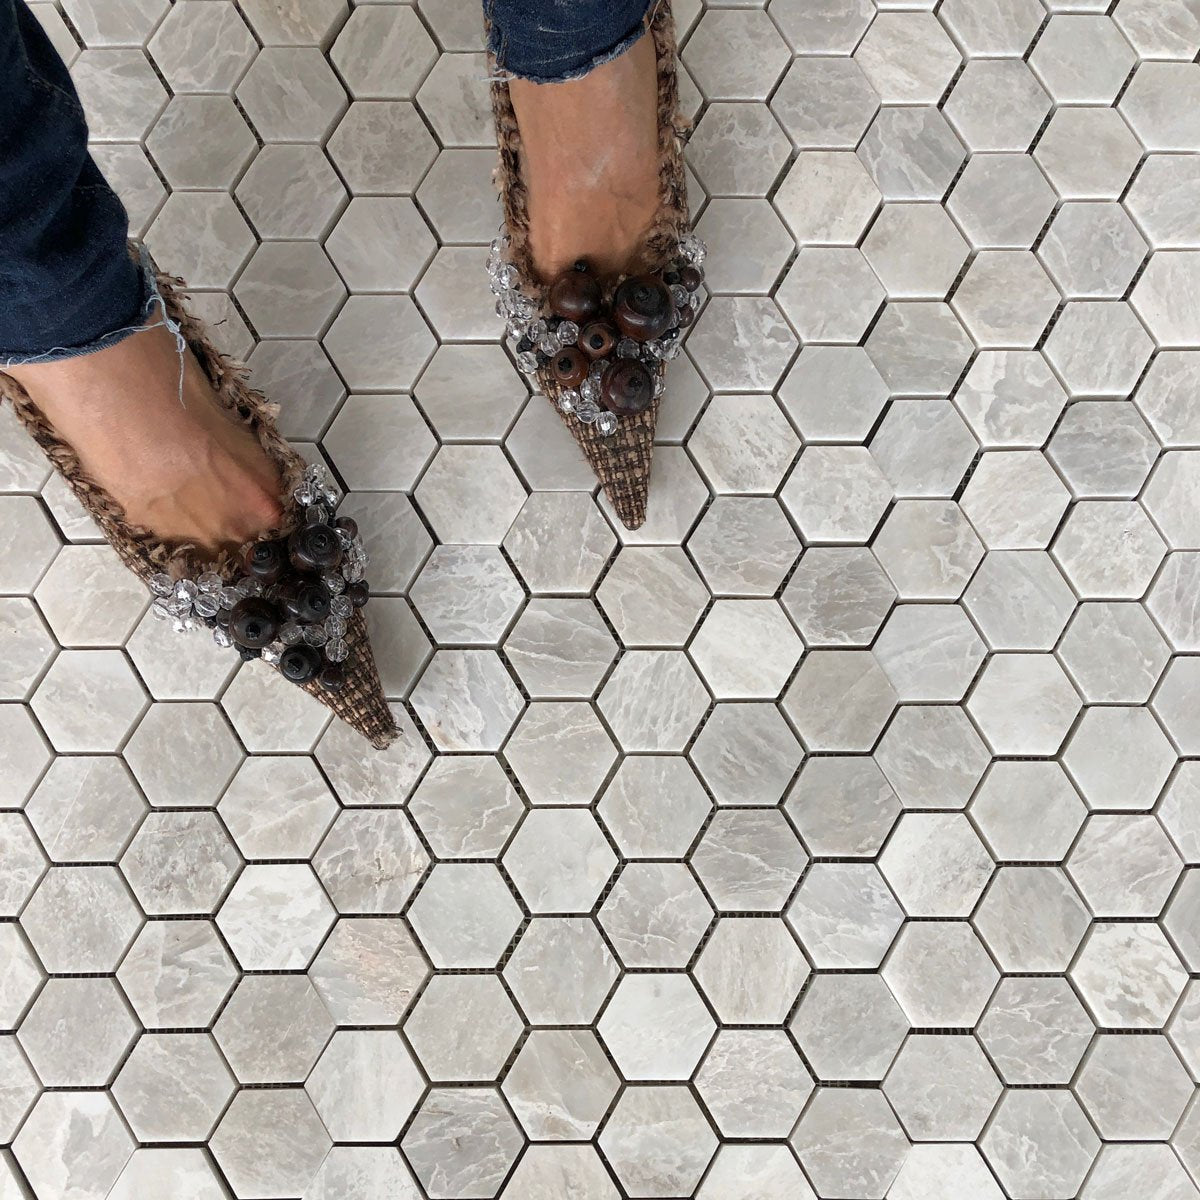 Alicha Hexagon 3 Polished Mosaic Backsplash and floor tile – All Marble  Tiles